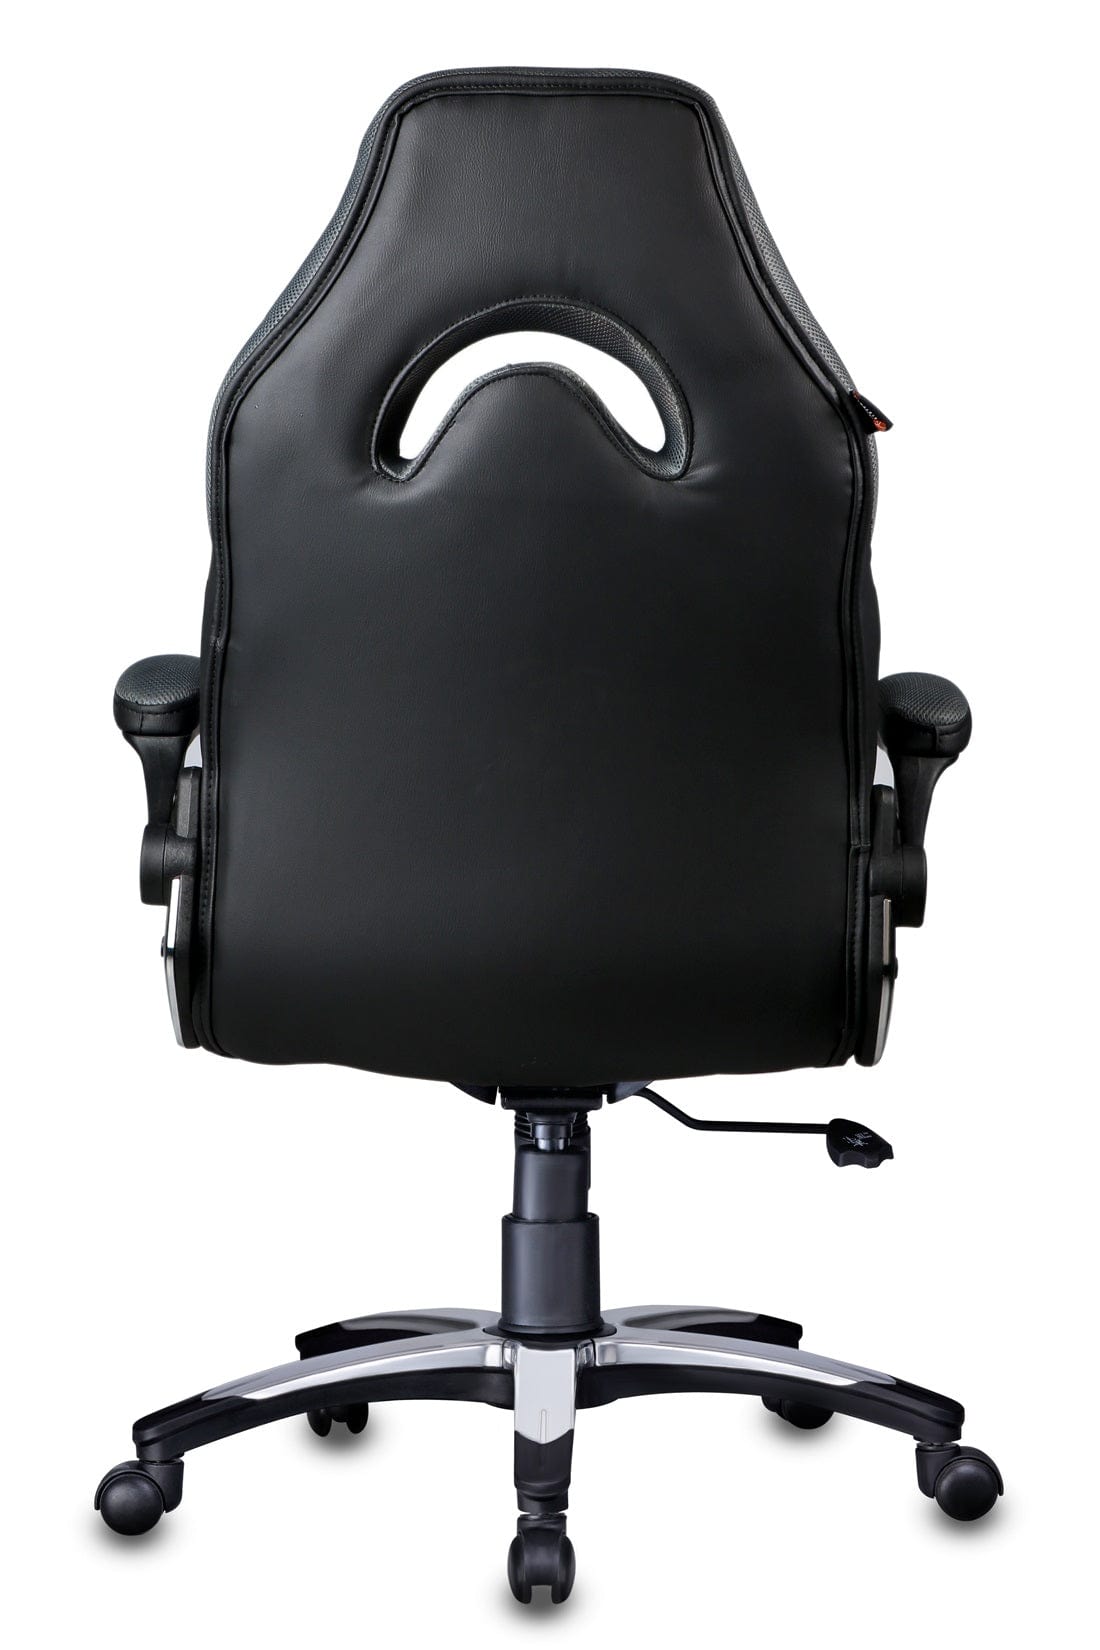 Stylish Designer chair in Black / Grey